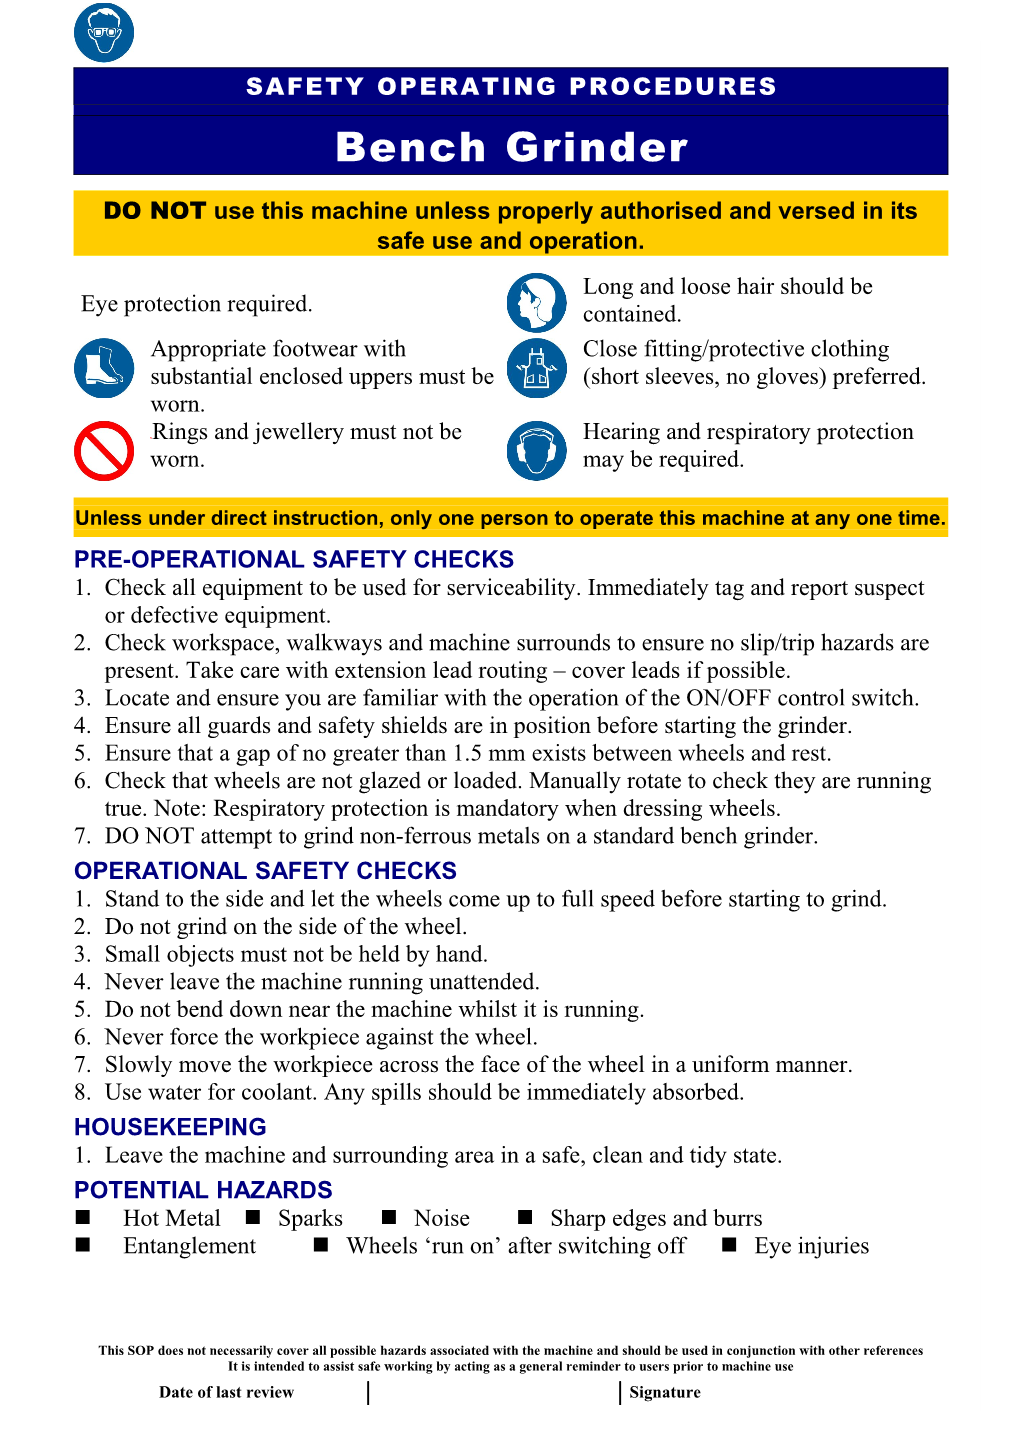 Safety Operating Procedures - Bench Grinder